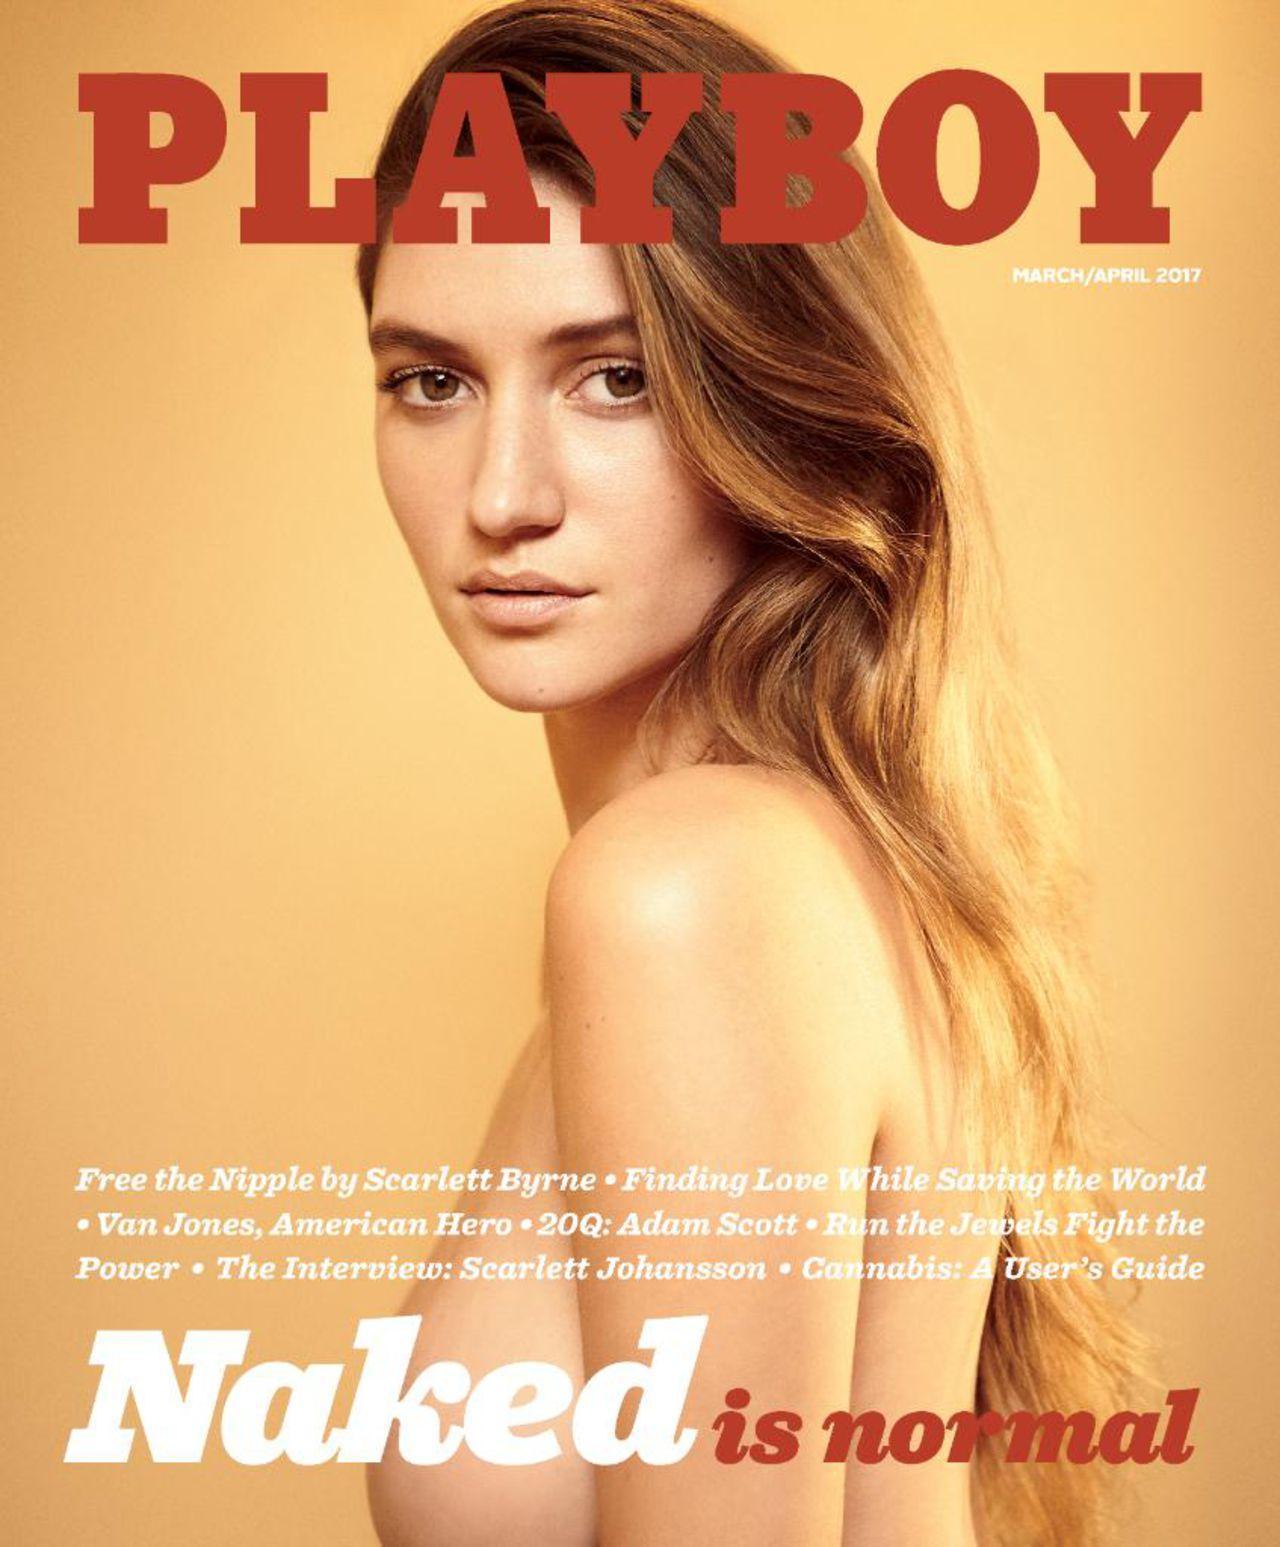 Las chicas desnudas vuelven a las portadas de 'Playboy'